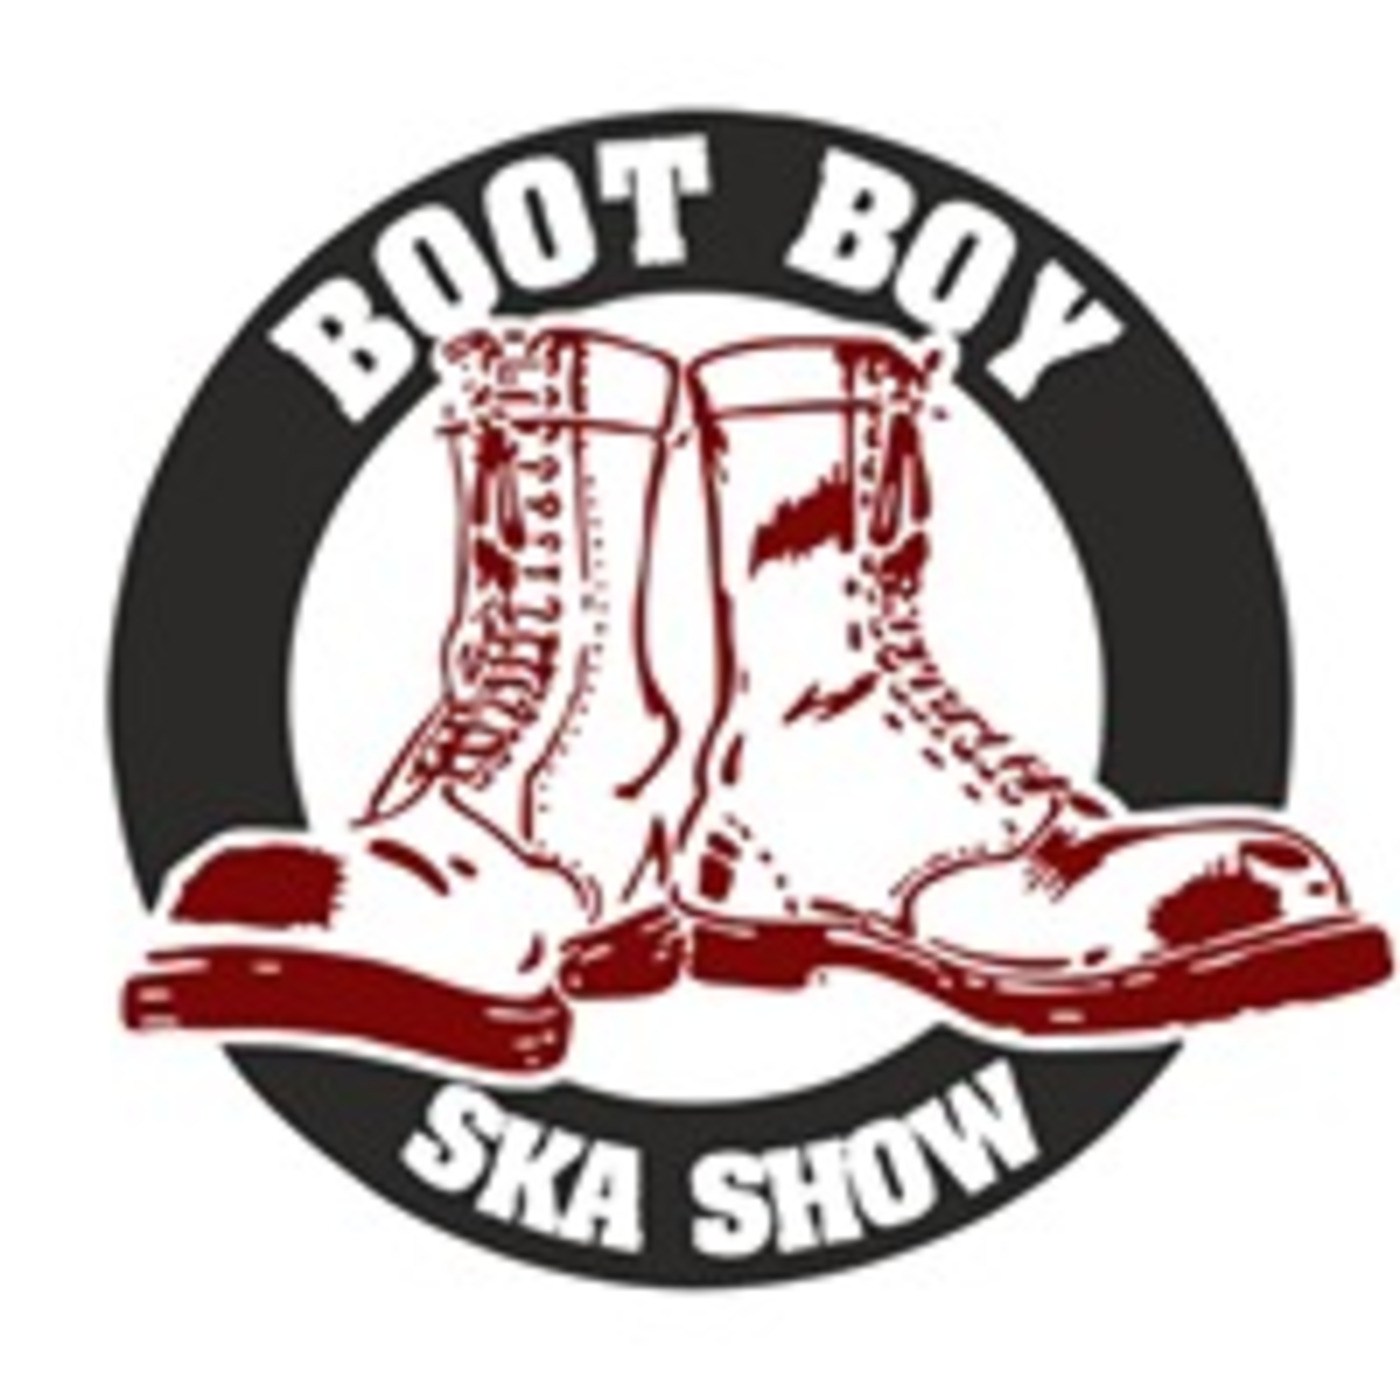 Episode 2726: The Boot Boy Ska Show With Geoff Longbar 17th October 2022 On www.bootboyradio.net